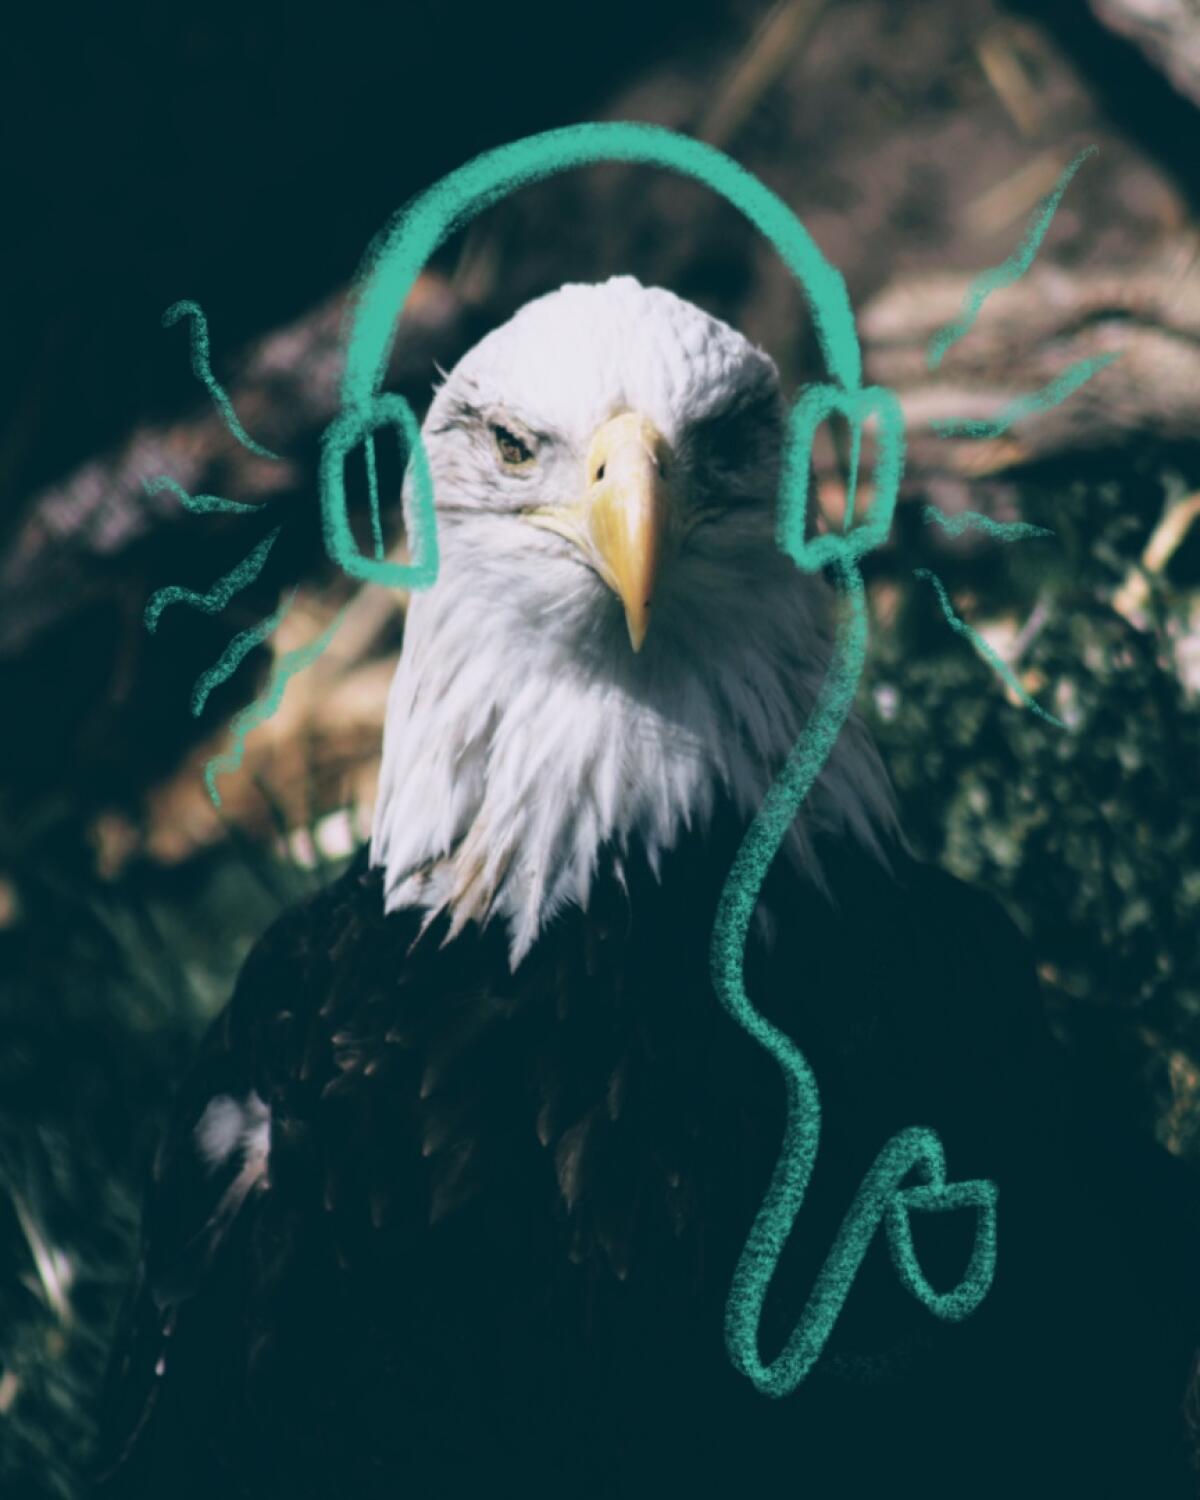 An eagle wearing headphones